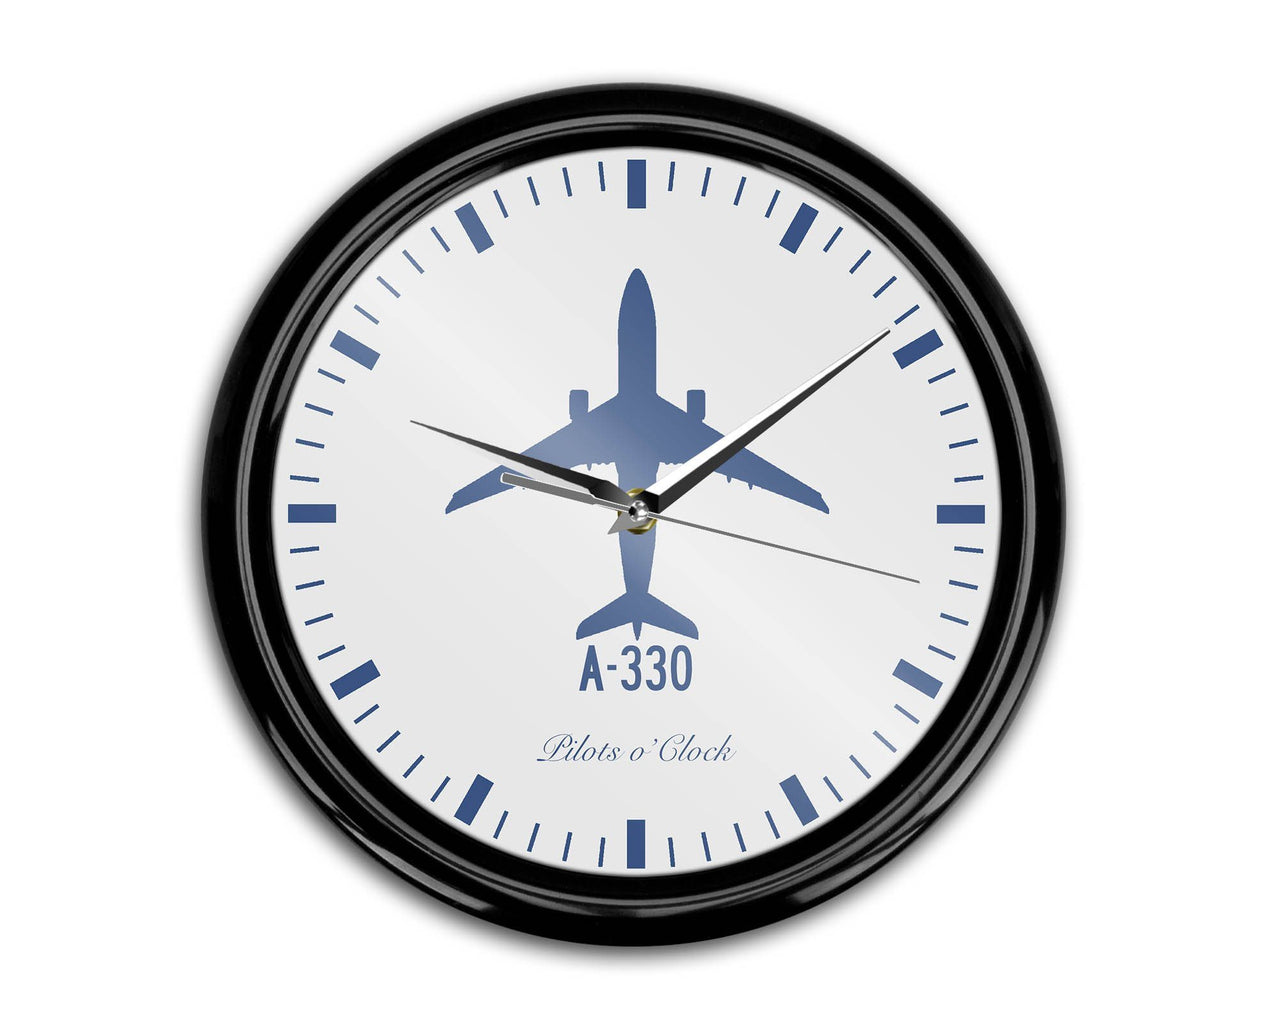 Airbus A330 Printed Wall Clocks Aviation Shop 